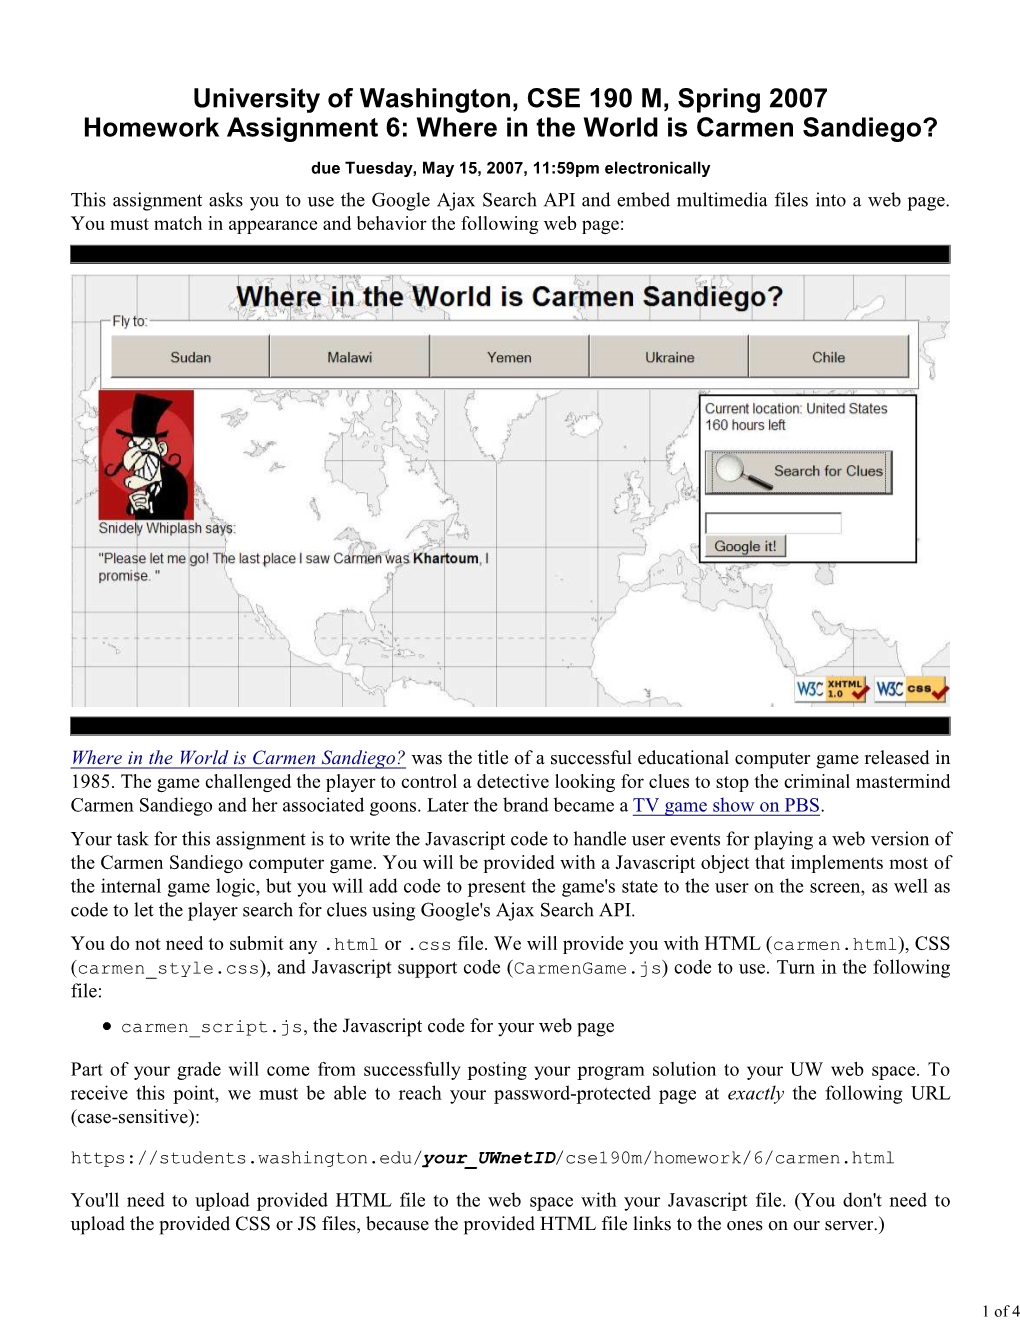 CSE 190 M Homework 6 (Where in the World Is Carmen Sandiego?